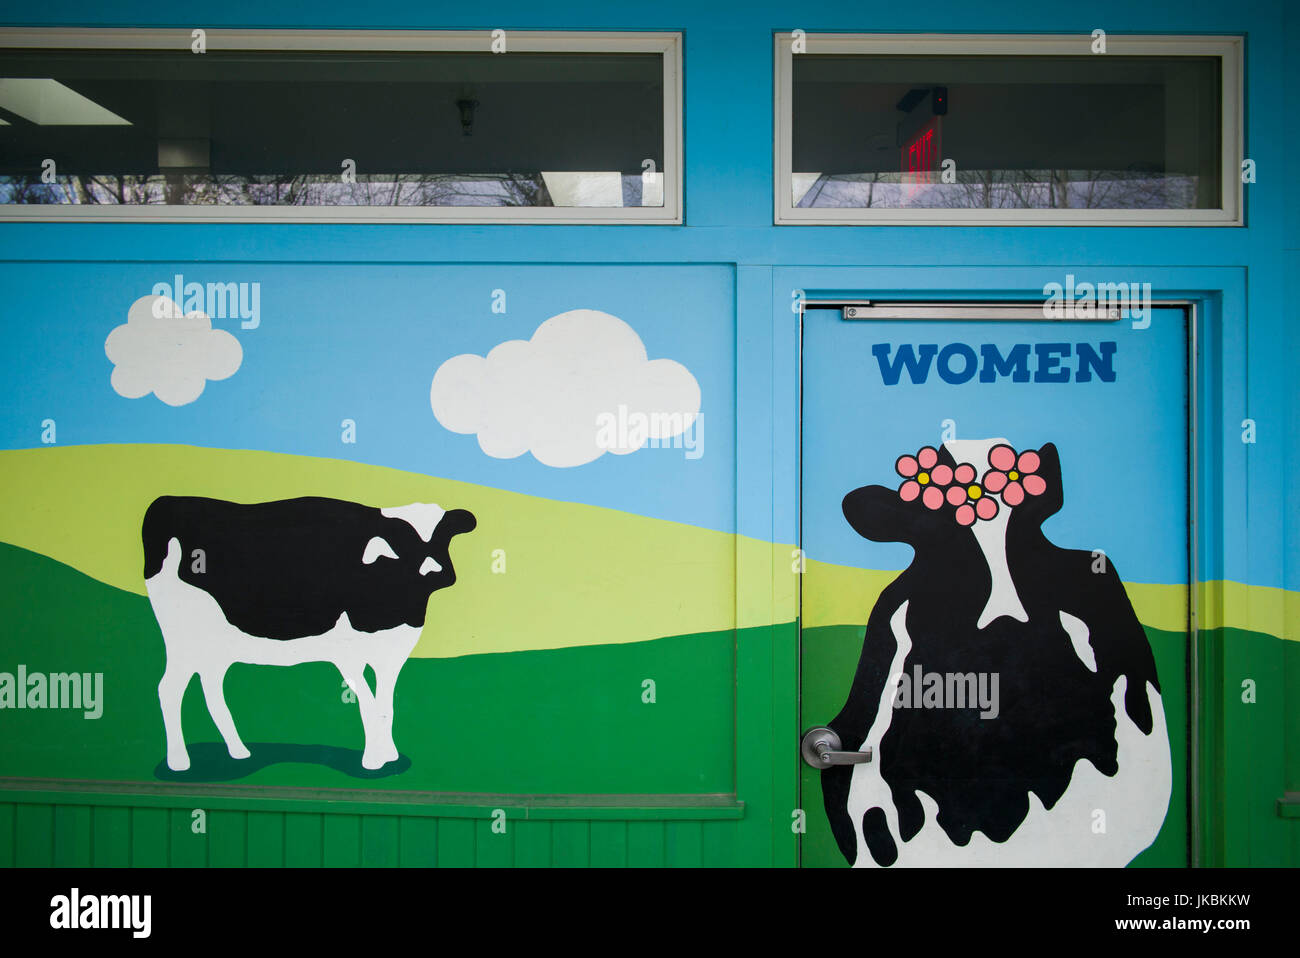 USA, Vermont, Waterbury, Ben & Jerry's Ice Cream World, cow-themed Women' room Bathroom door Stock Photo